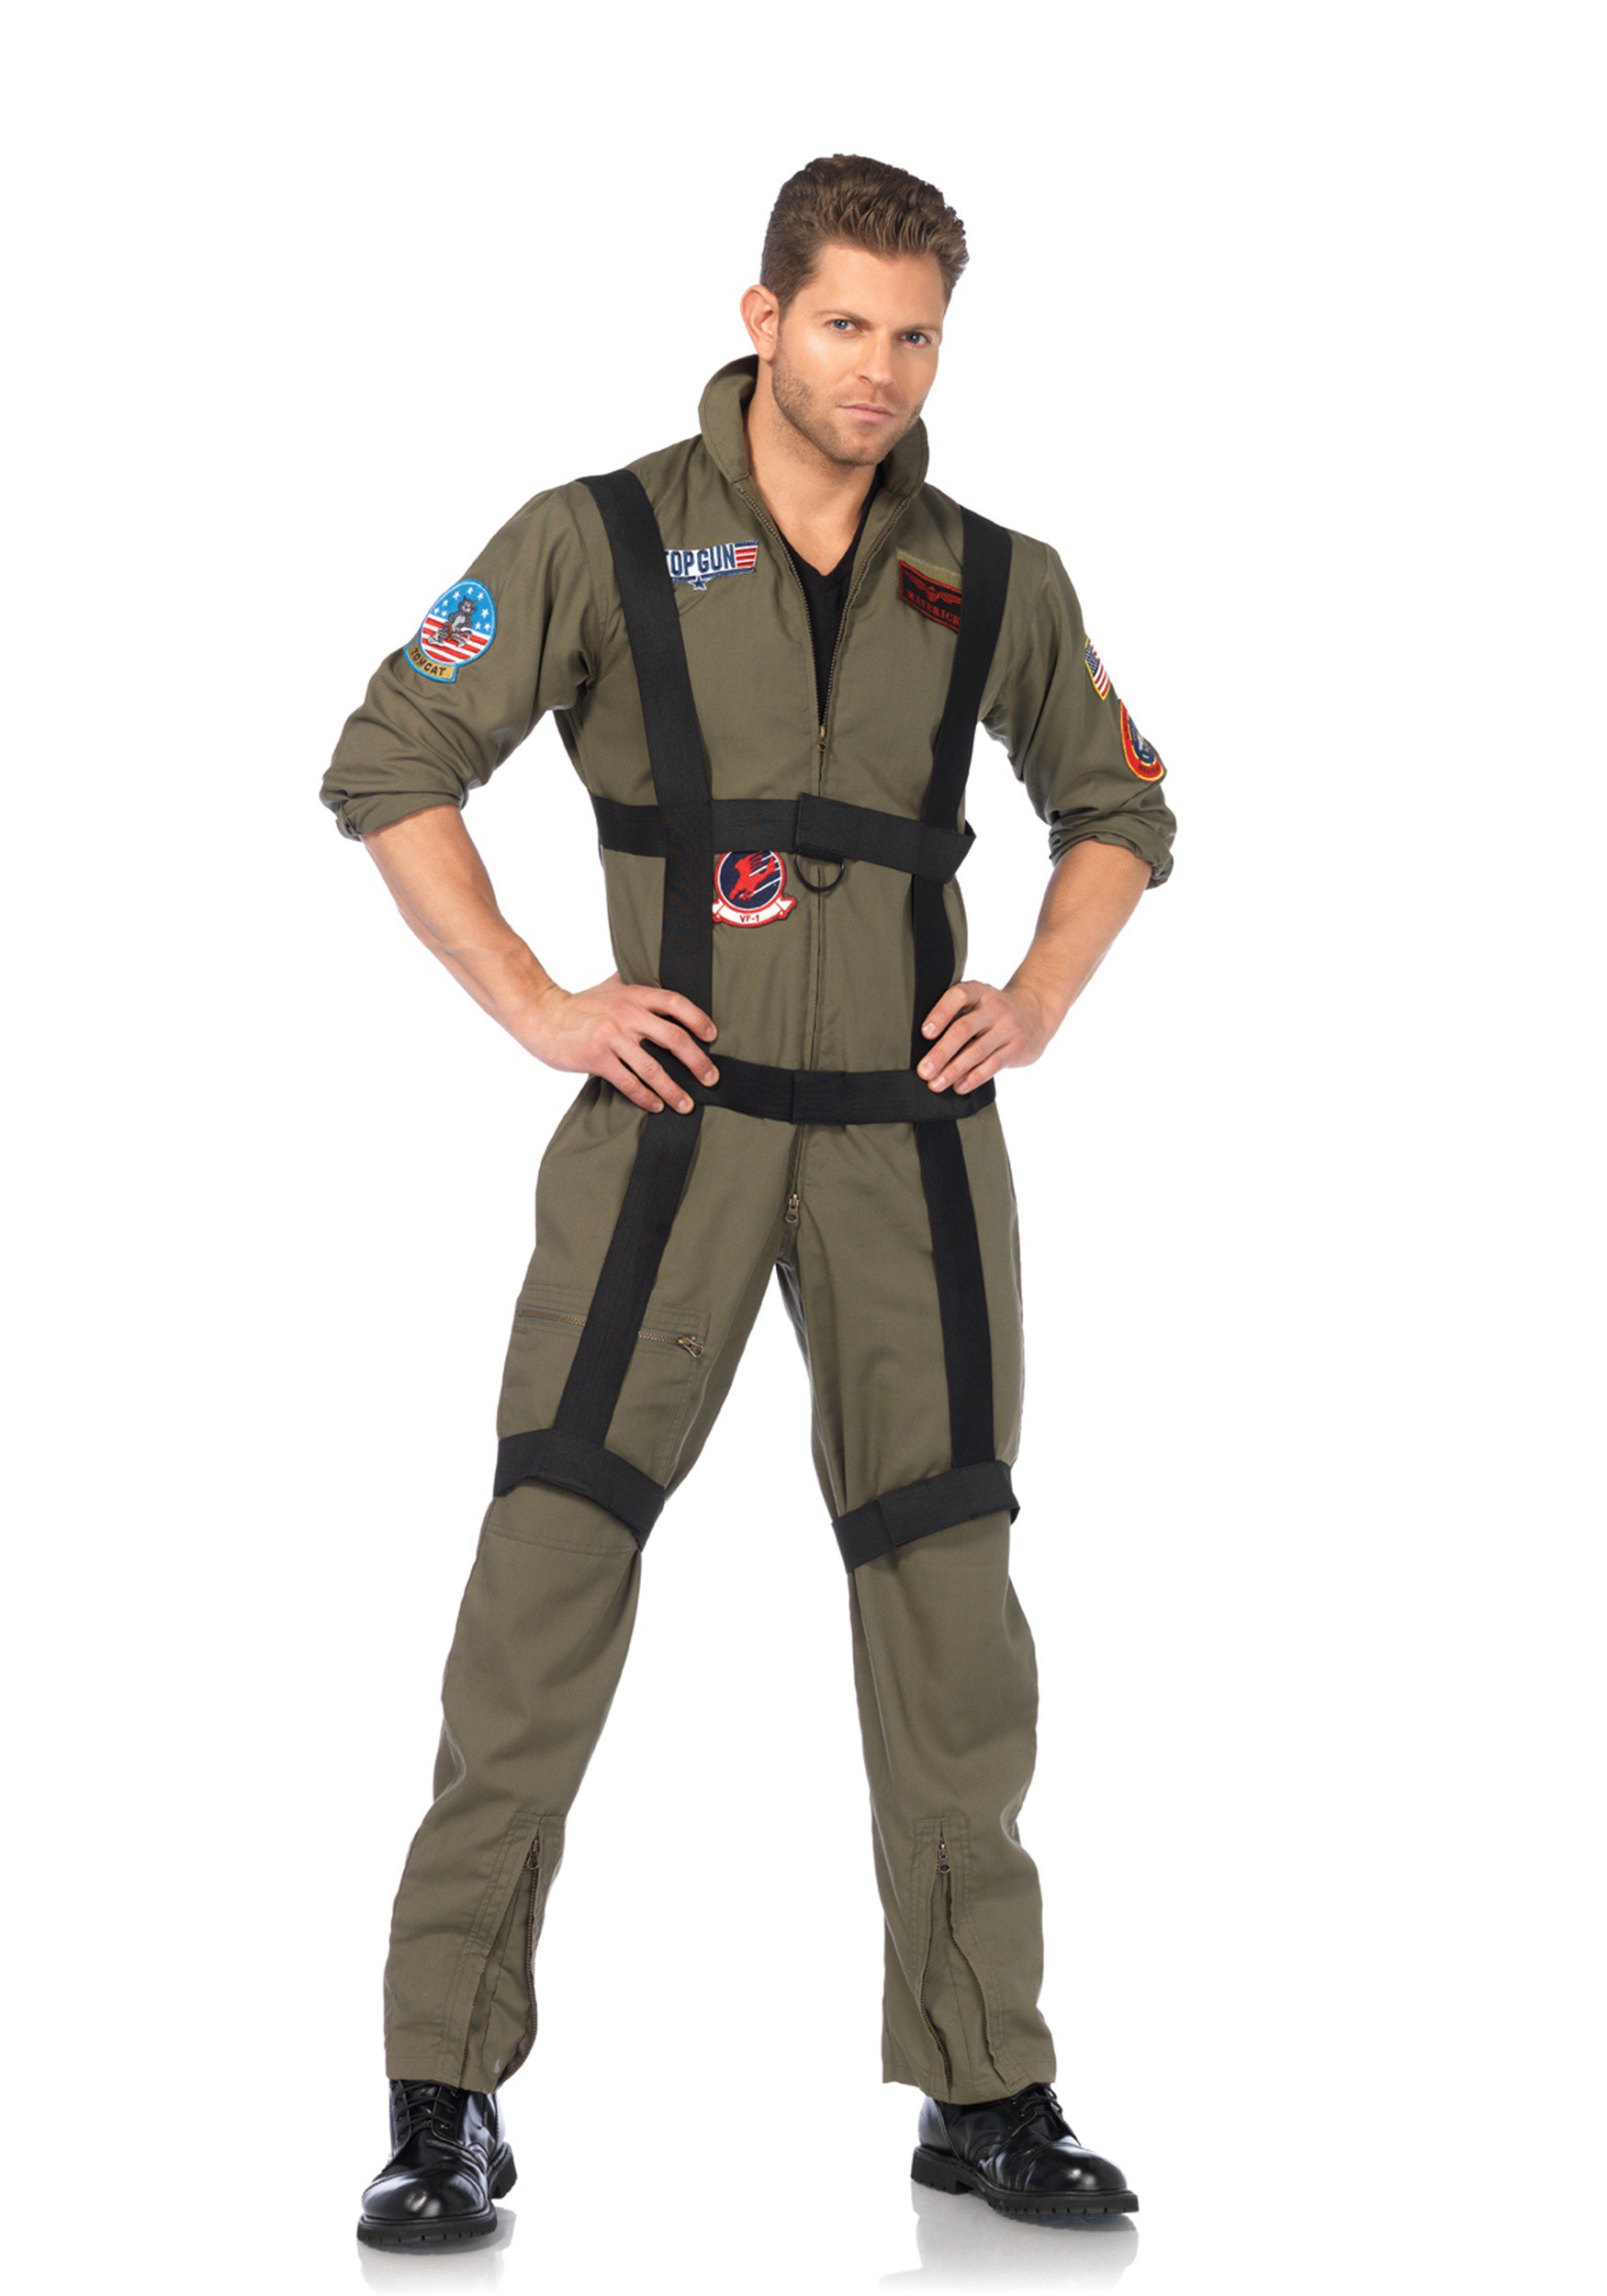 Adult Men Top Gun Jumpsuit Costume with Harness